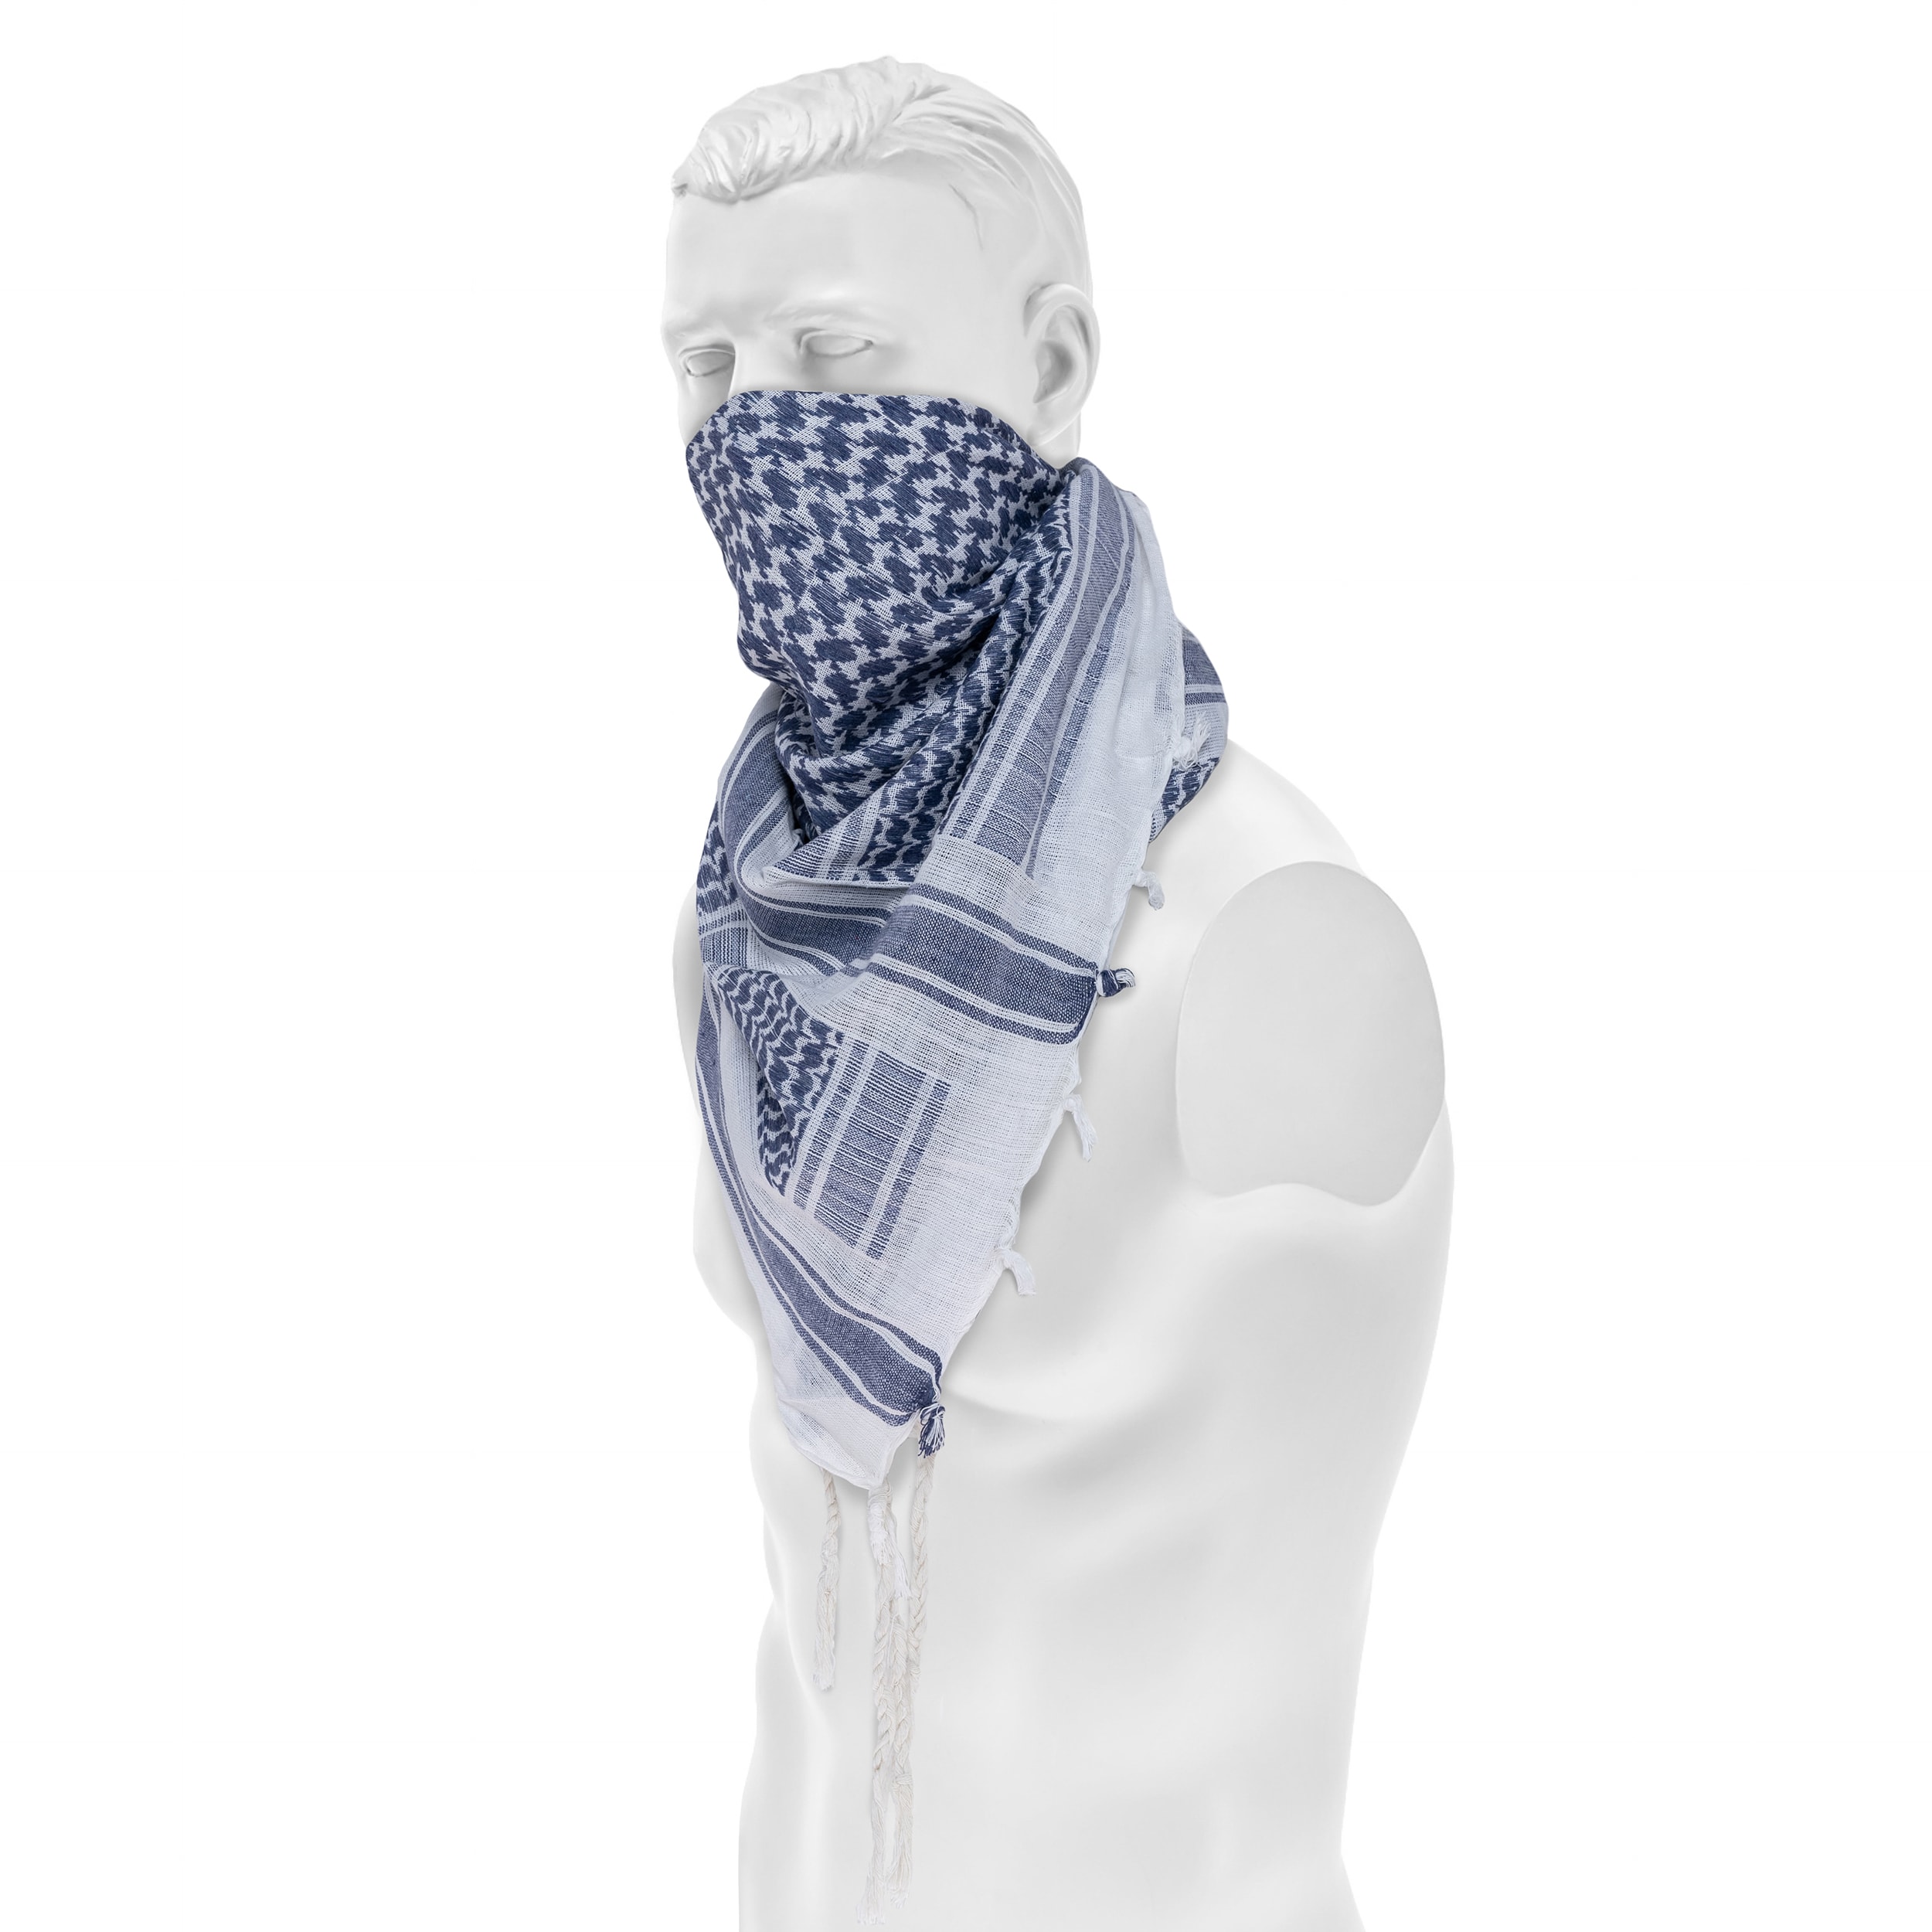 Arafatka chusta ochronna Mil-Tec - White/Blue